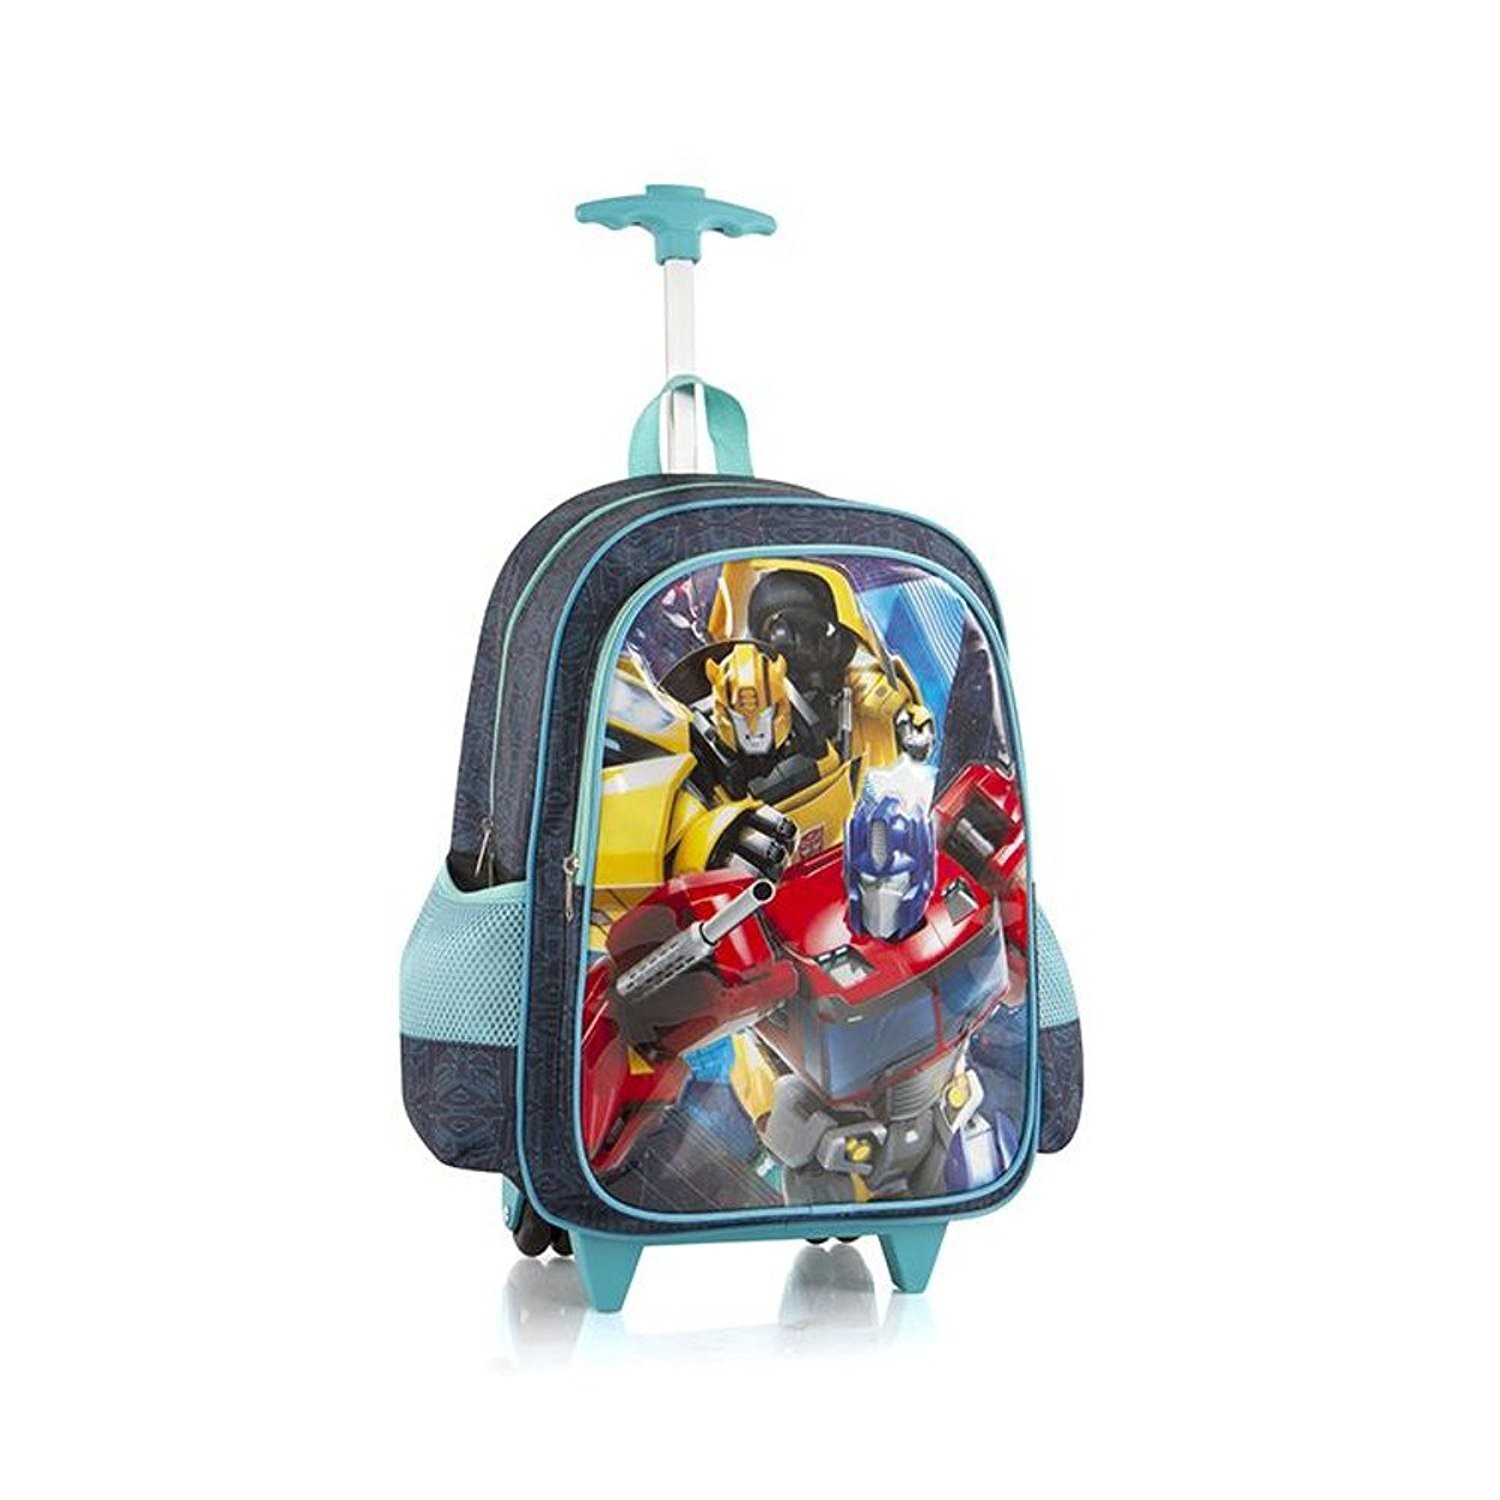 transformers backpack canada